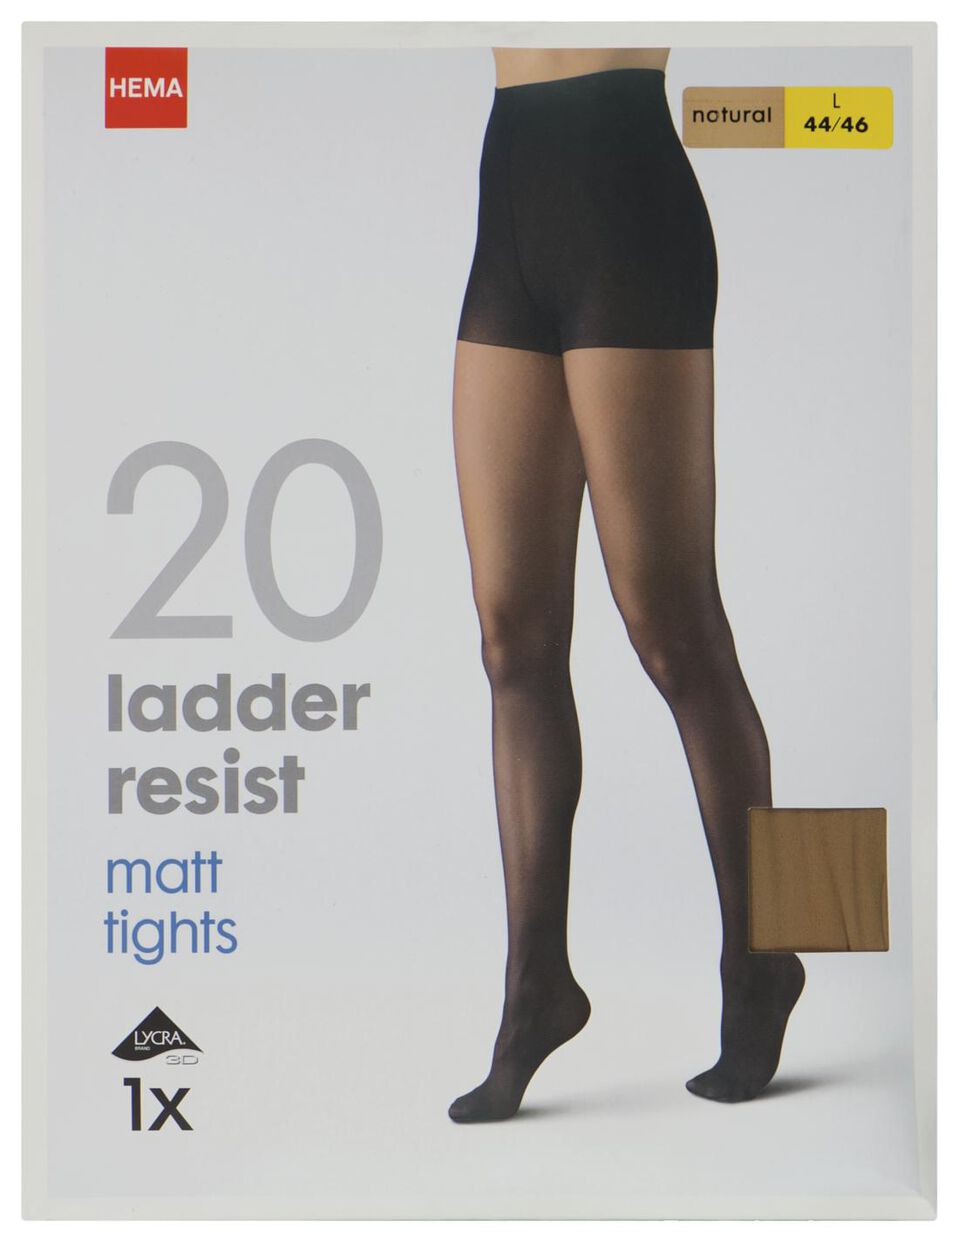 panty ladder resist 20denier naturel - HEMA